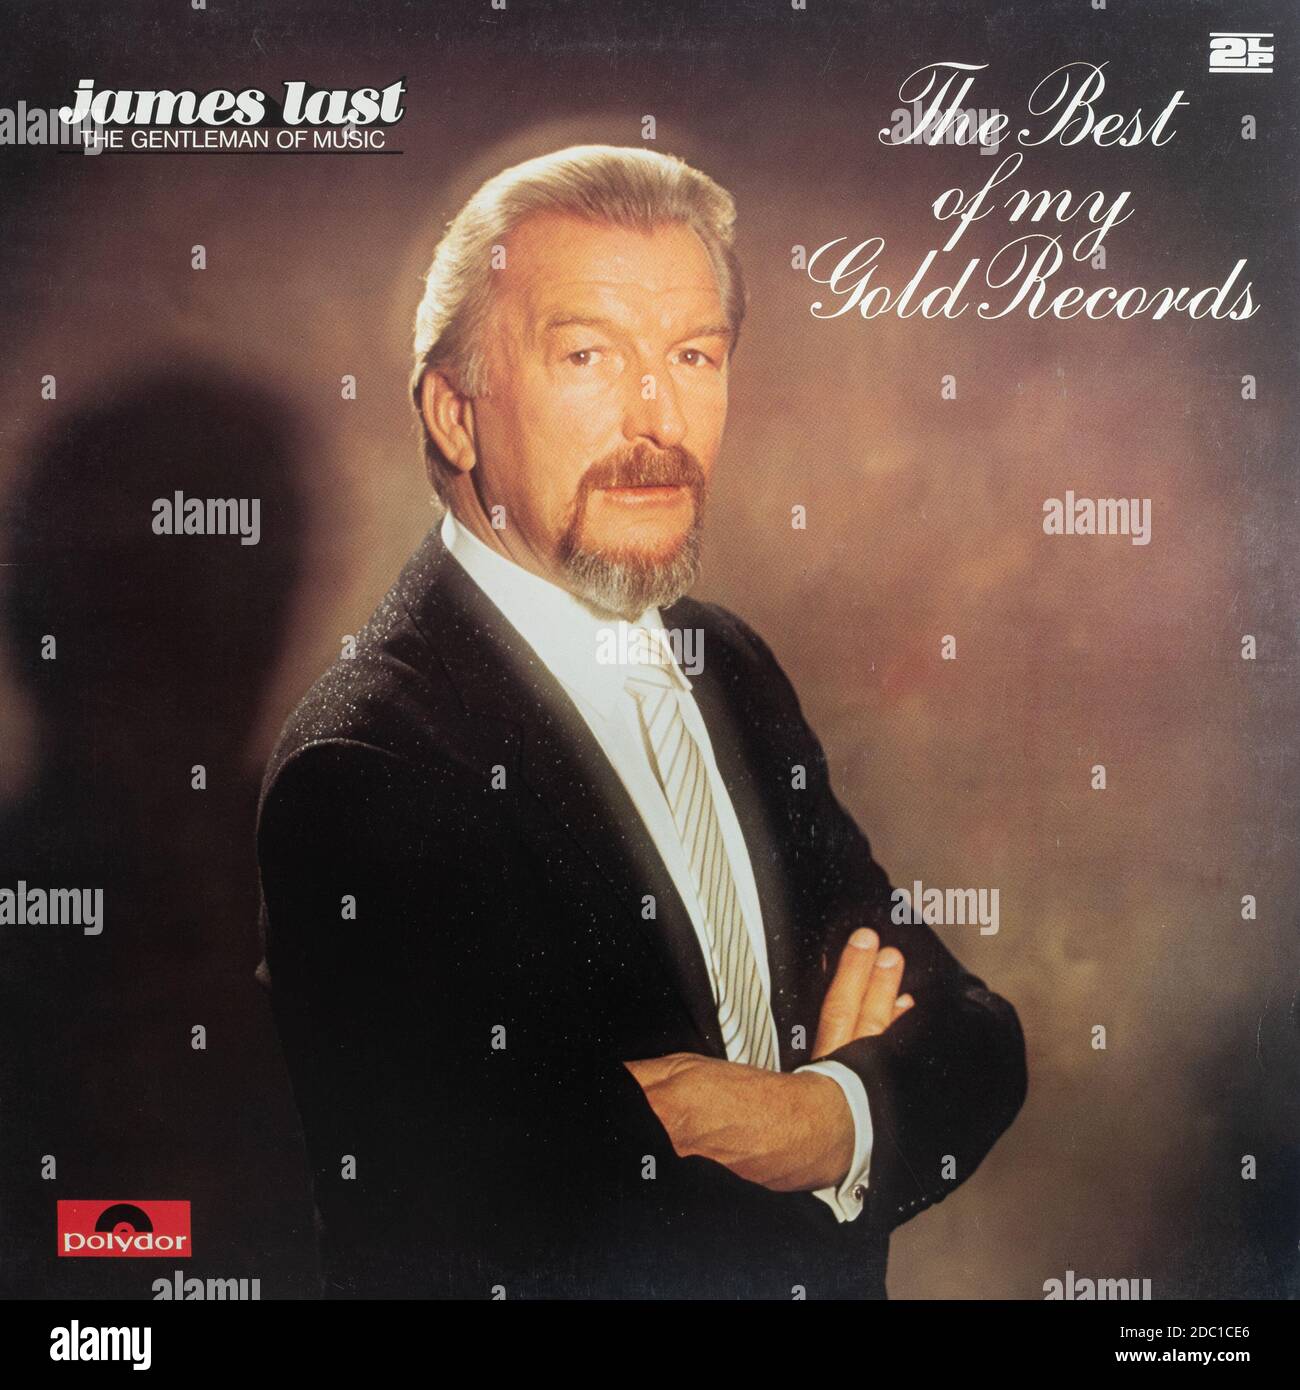 James Last vinile LP copertina dell'album, The Best of my Gold Records Foto Stock